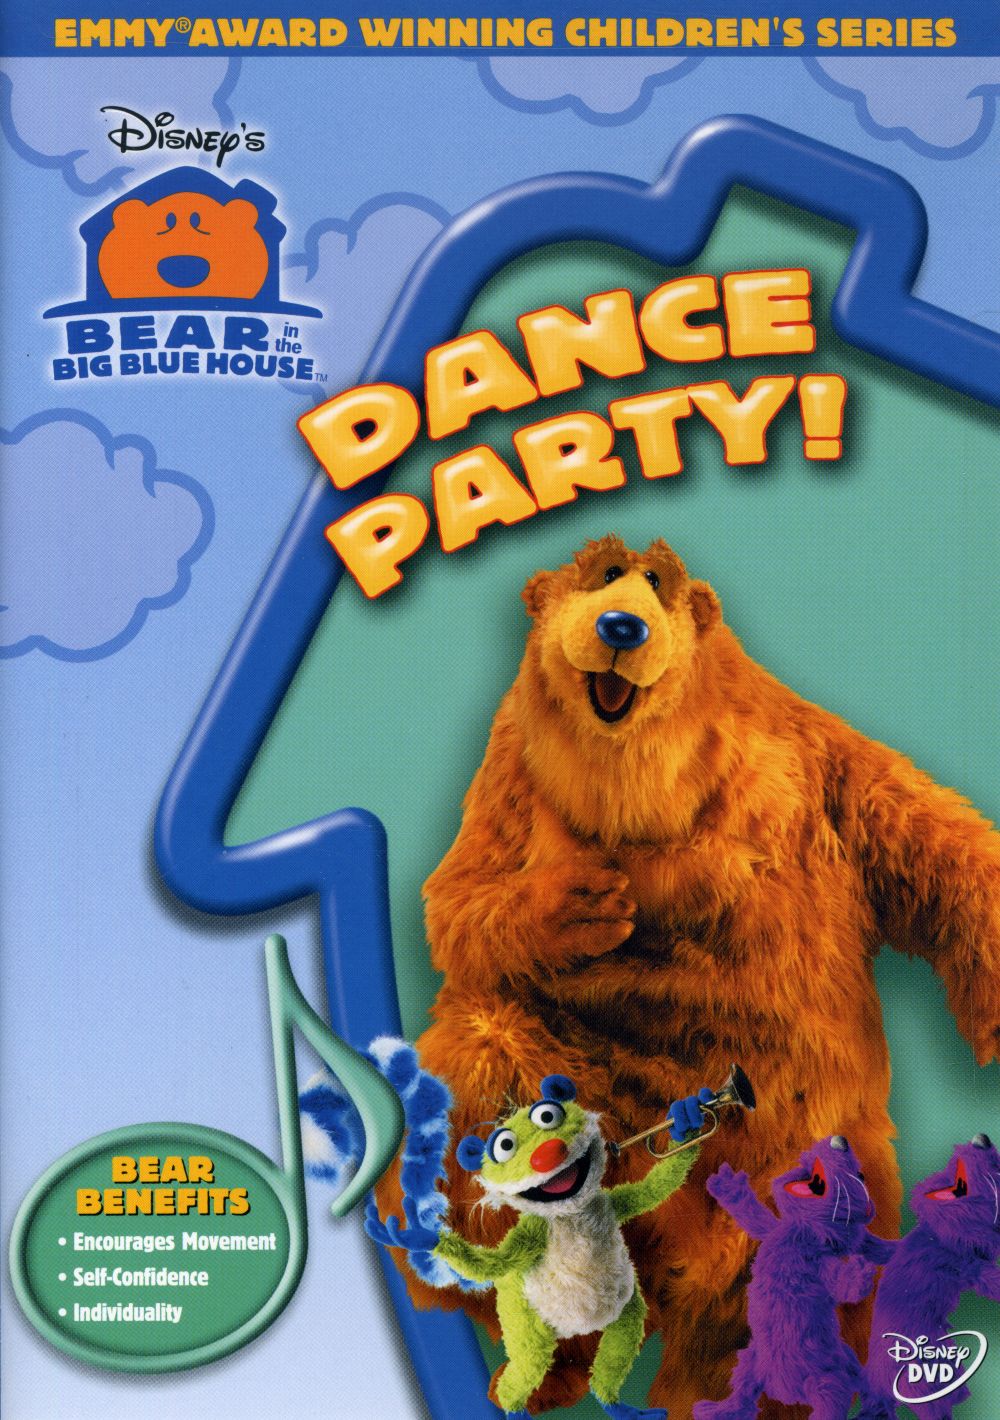 DANCE PARTY